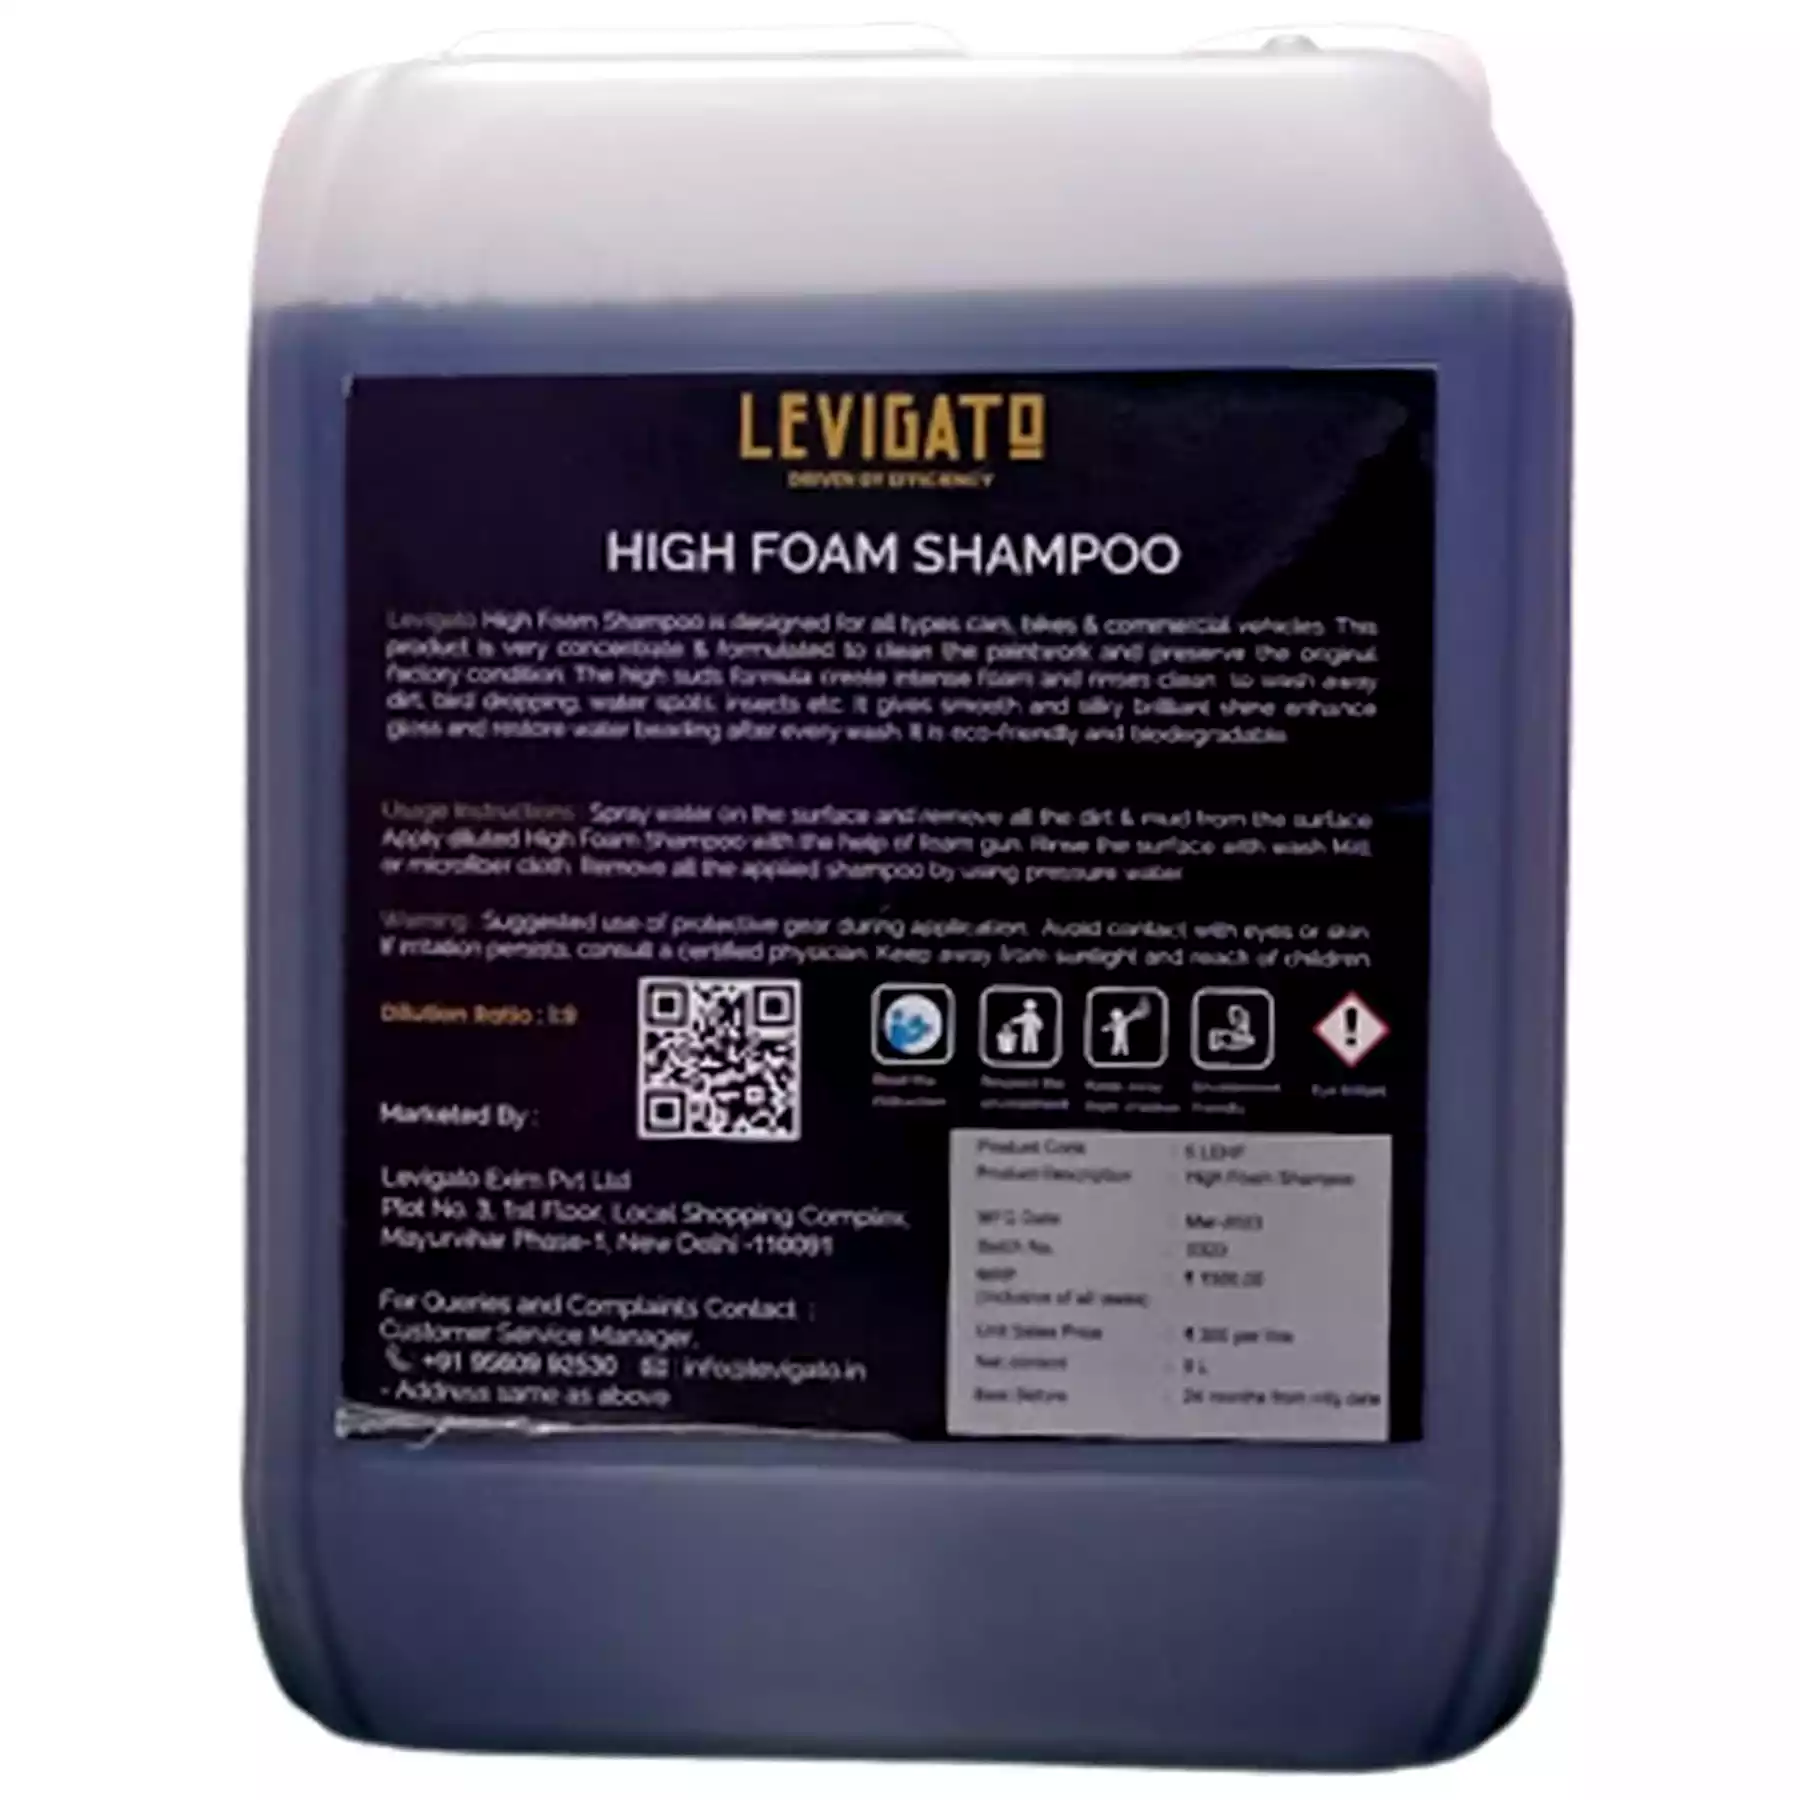 High Foam Shampoo